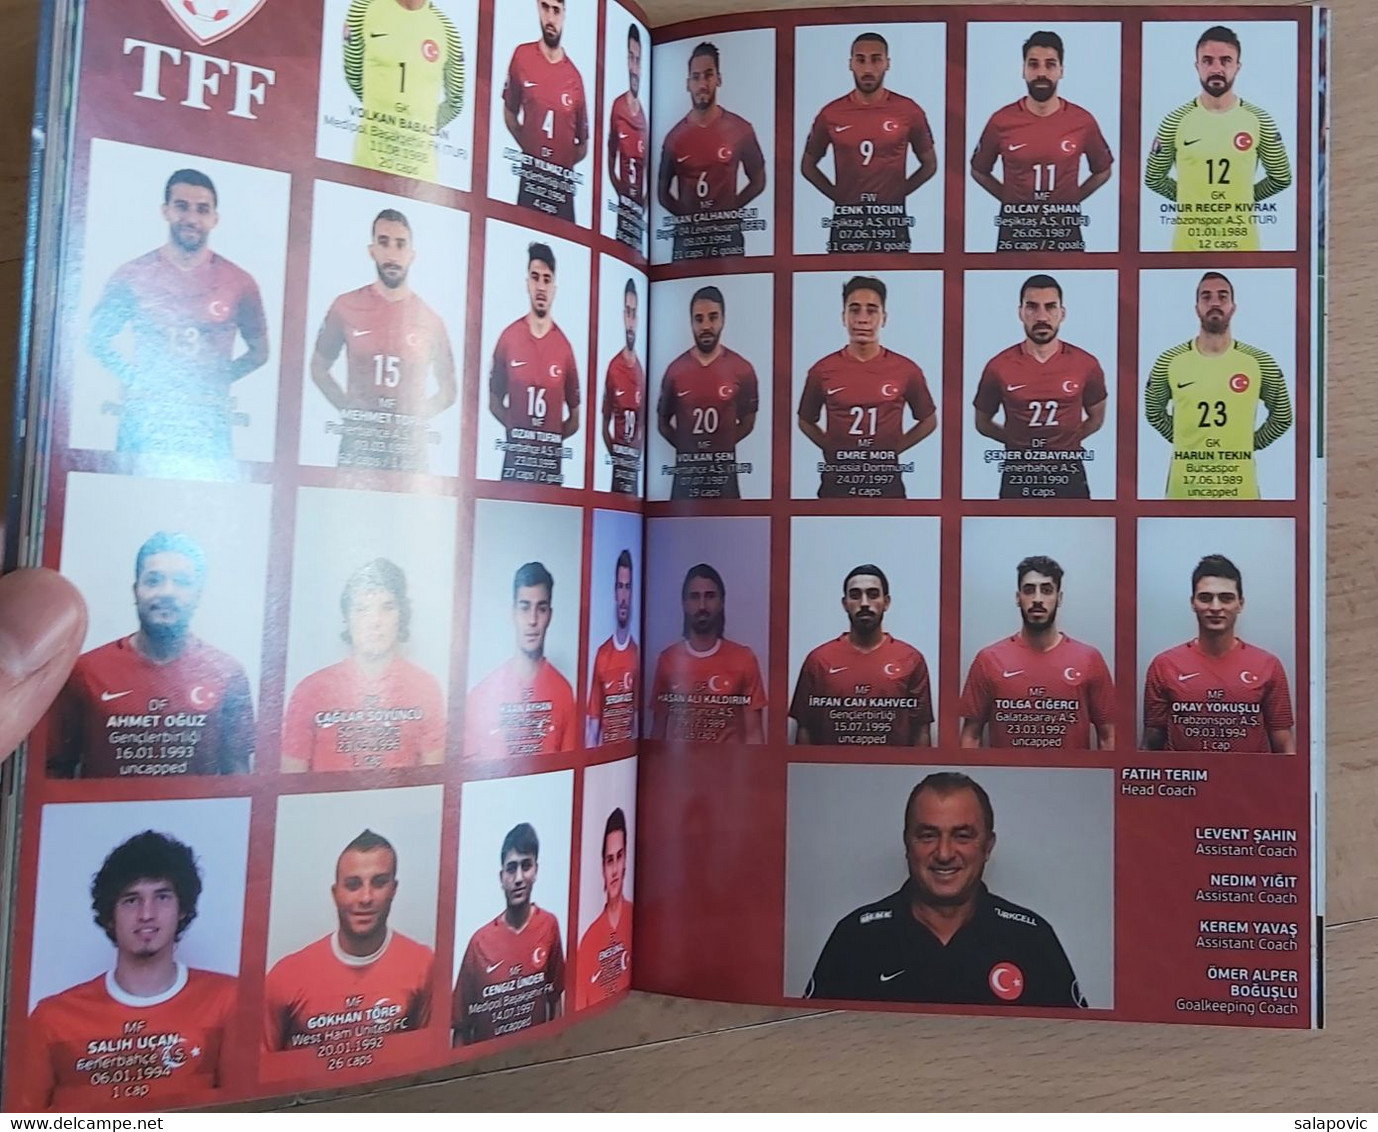 CROATIA V TURKEY - 2018 FIFA WORLD CUP Qualif. Football Match Program FOOTBALL CROATIA FOOTBALL MATCH PROGRAM - Books